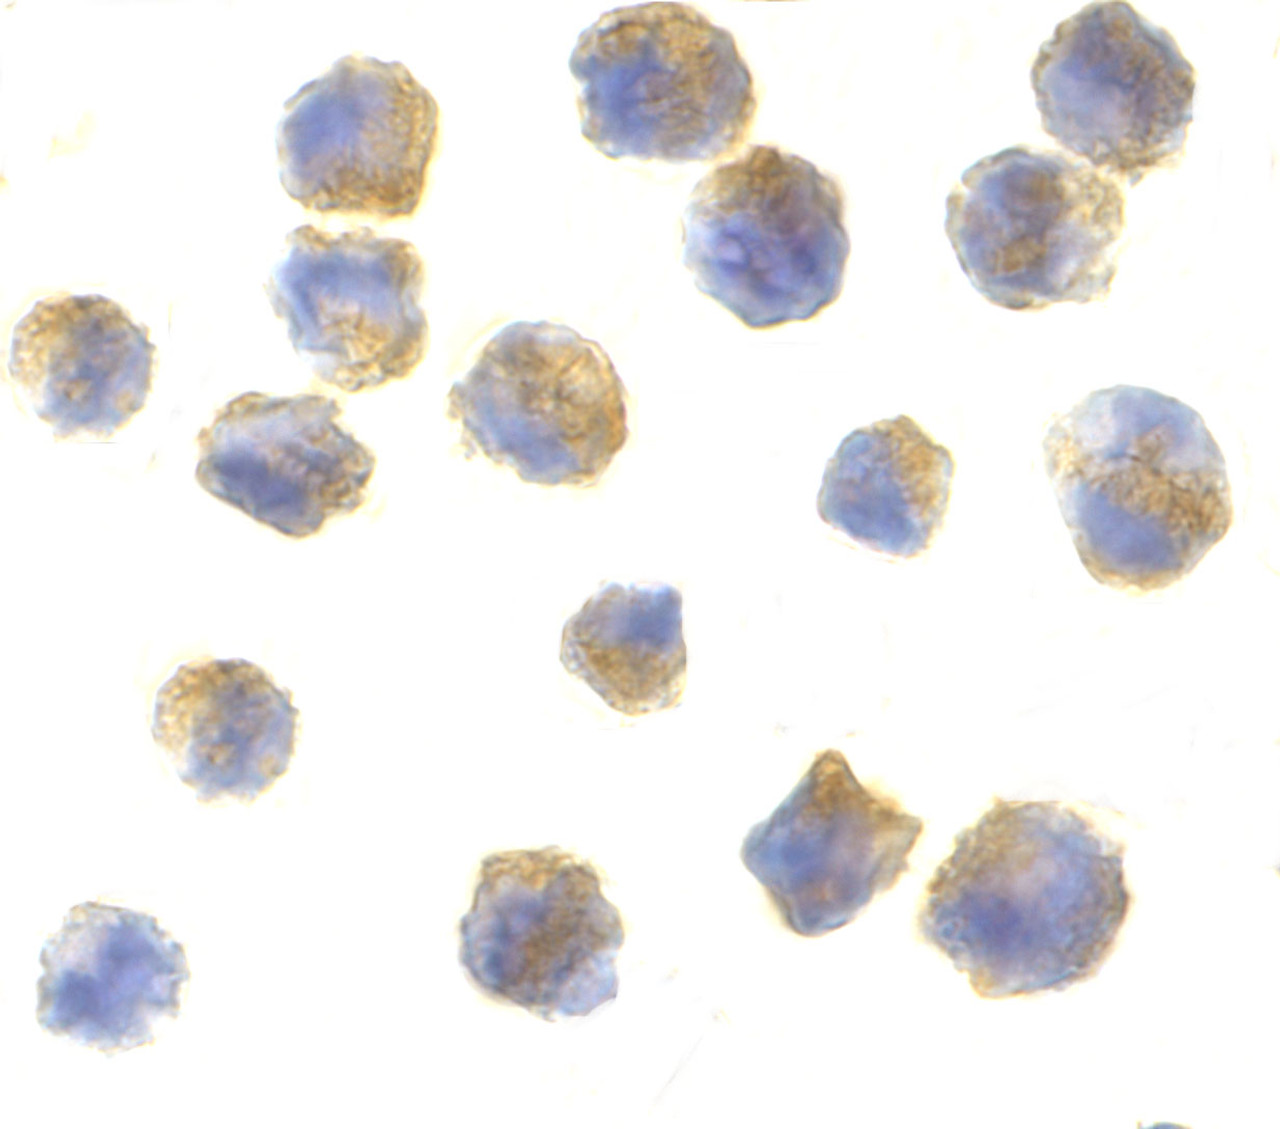 Immunocytochemistry of precerebellin in 3T3 cells with precerebellin antibody at 10 ug/mL.